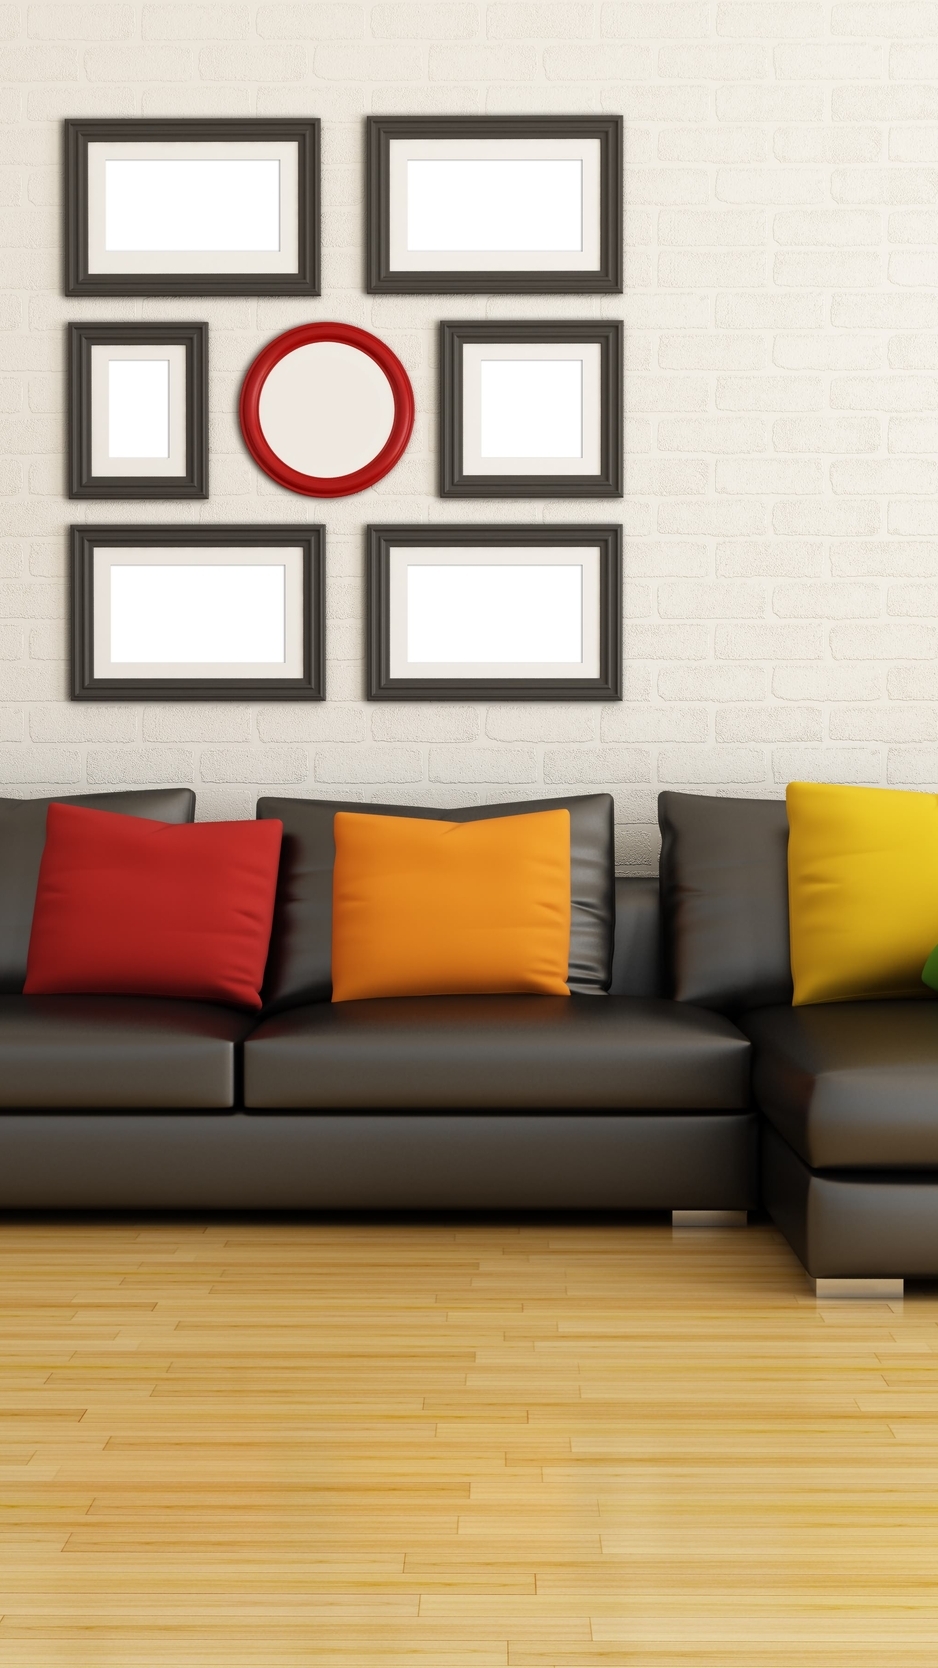 Image: Leather sofa, floor lamp, decorative pillows, planters, tree, wall, floor